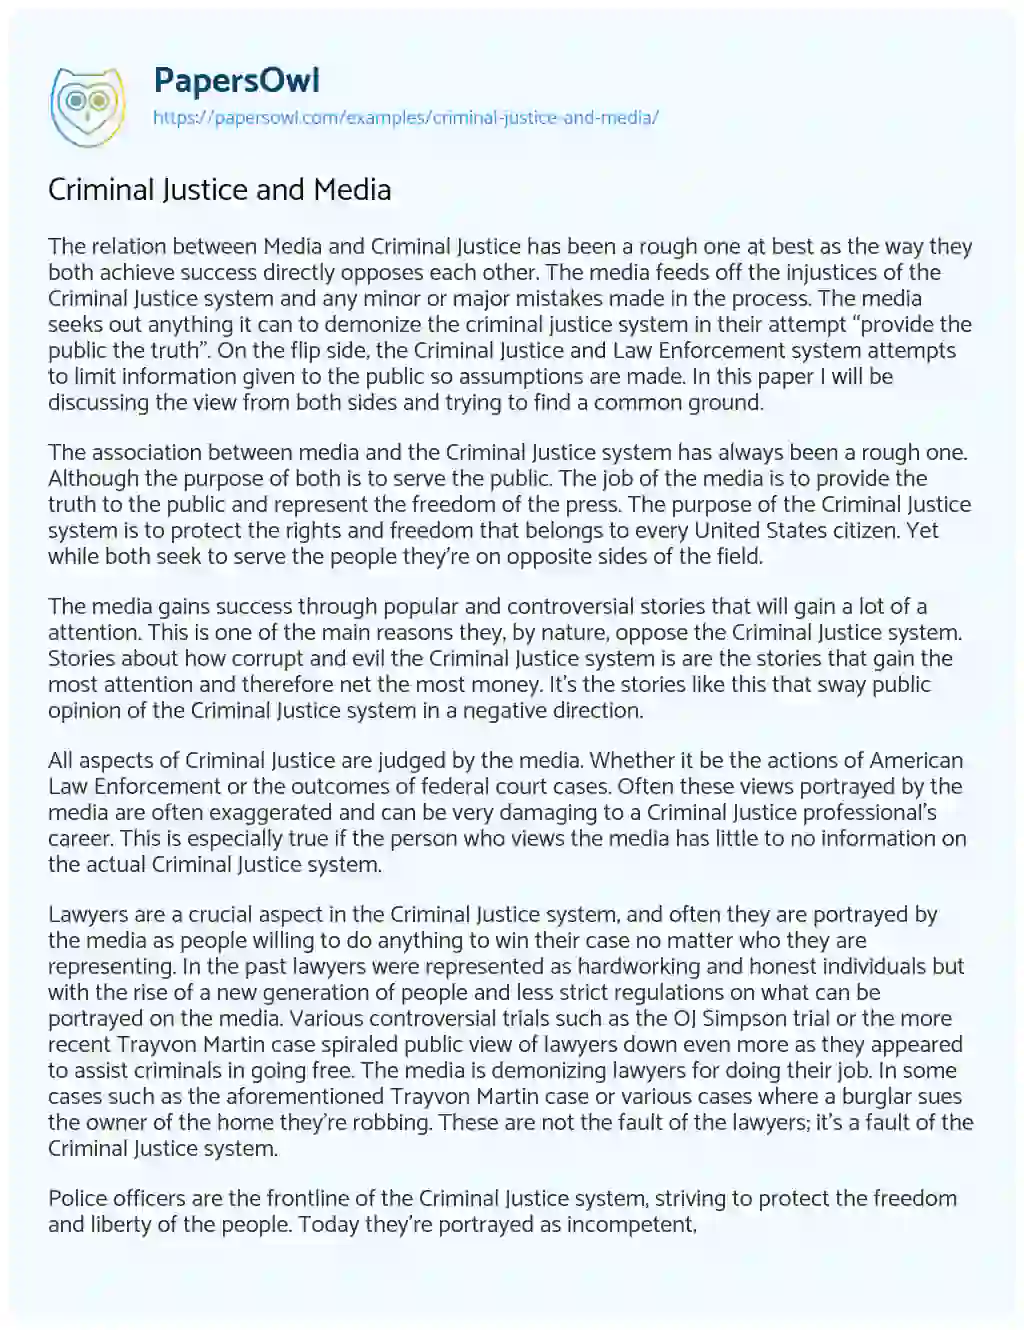 Essay on Criminal Justice and Media